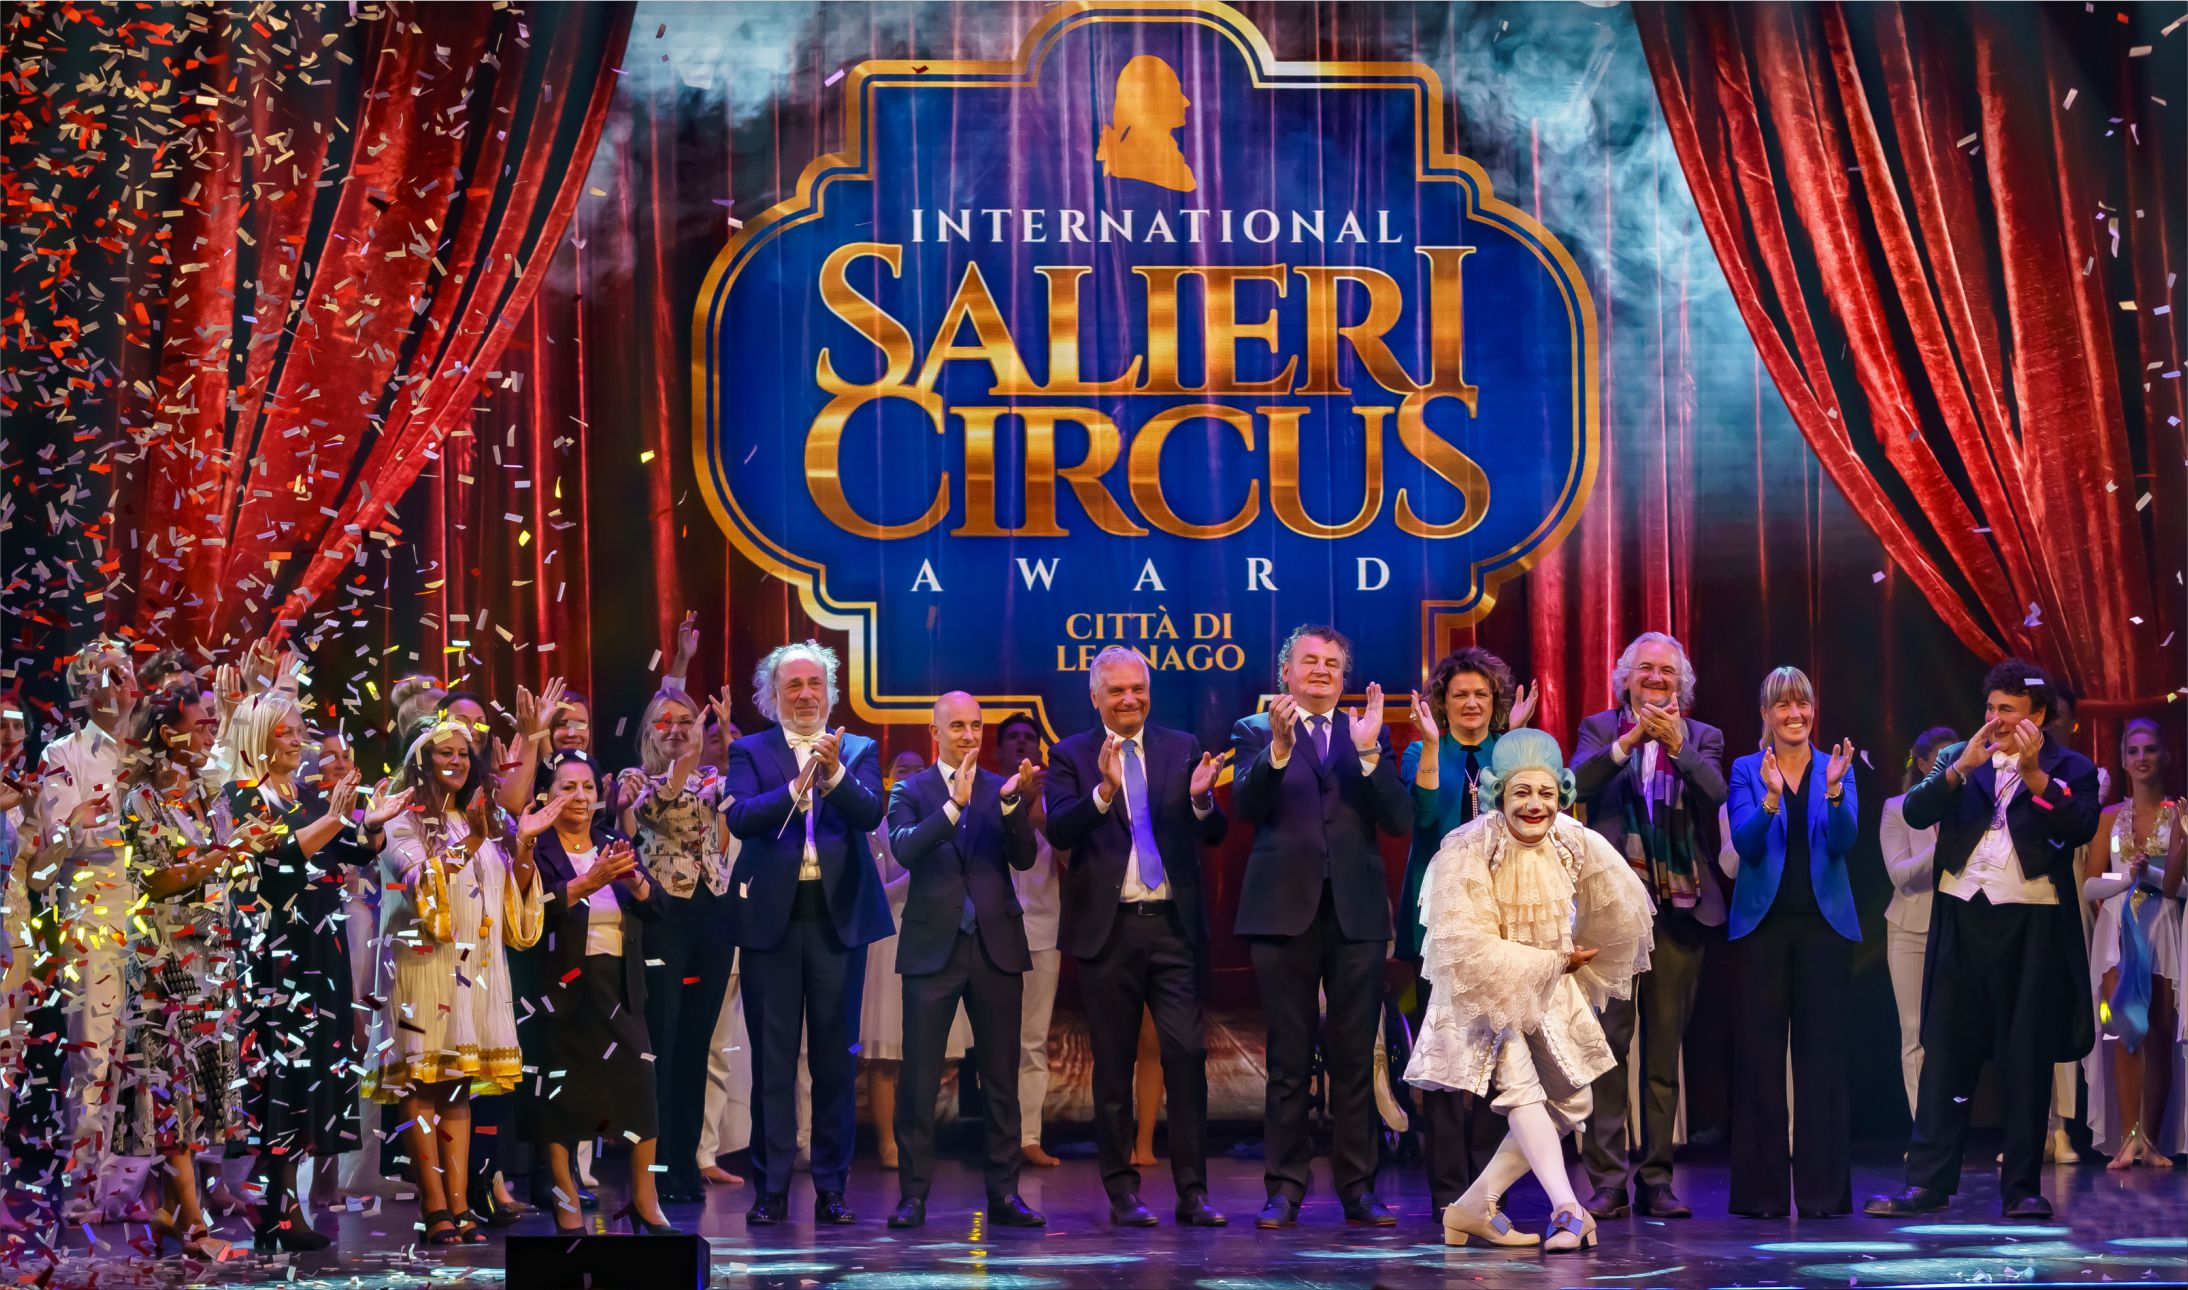 Immagini di International Salieri Circus Award 2021